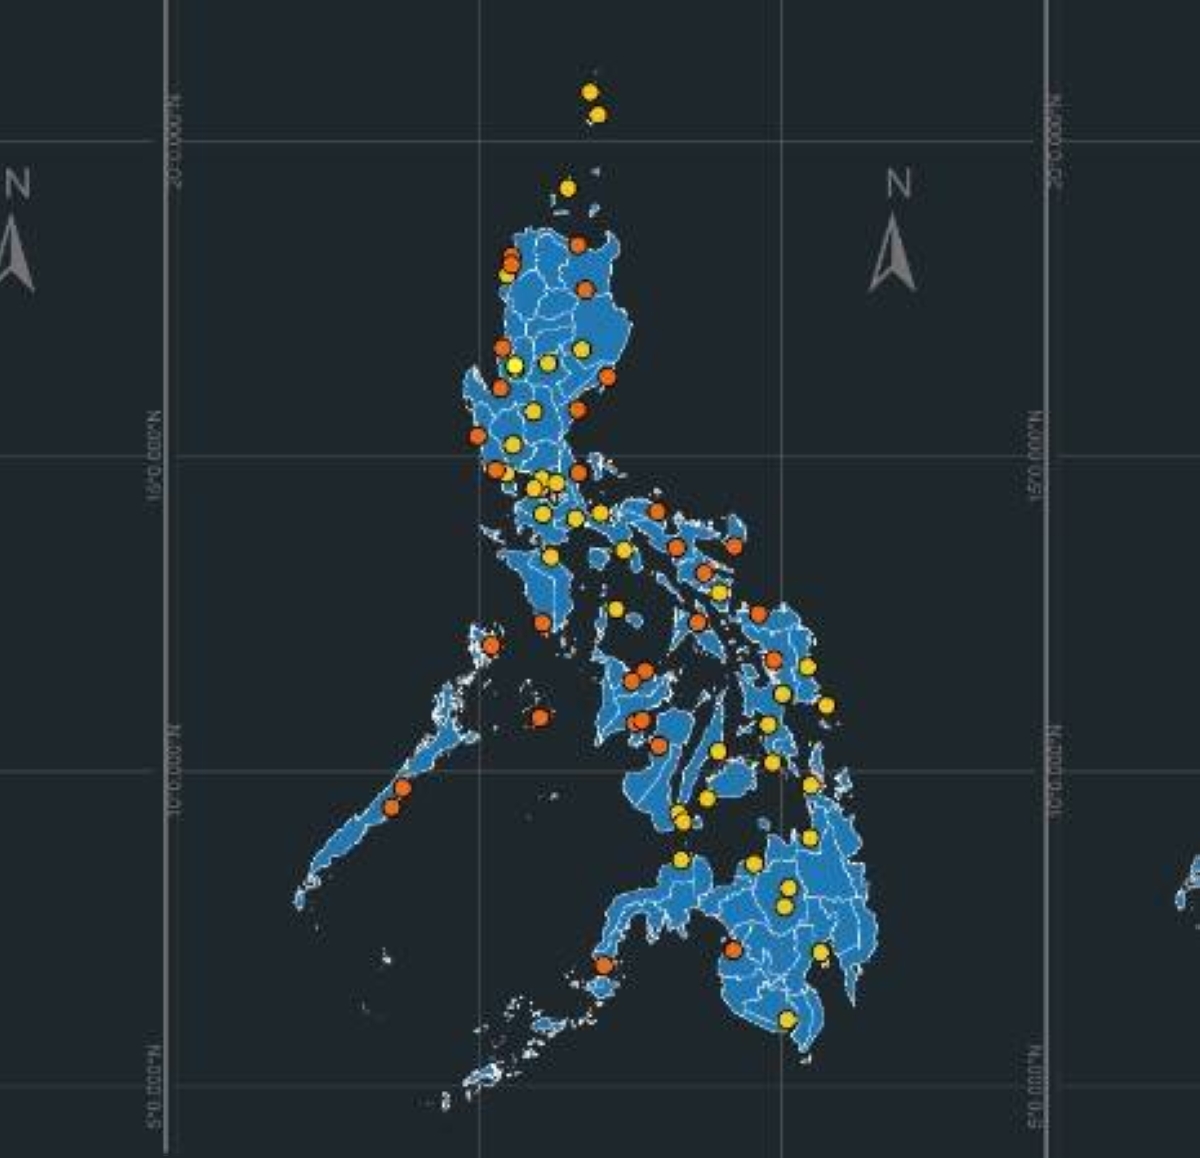 pangasinan, cagayan records highest heat index at 48 c — pagasa